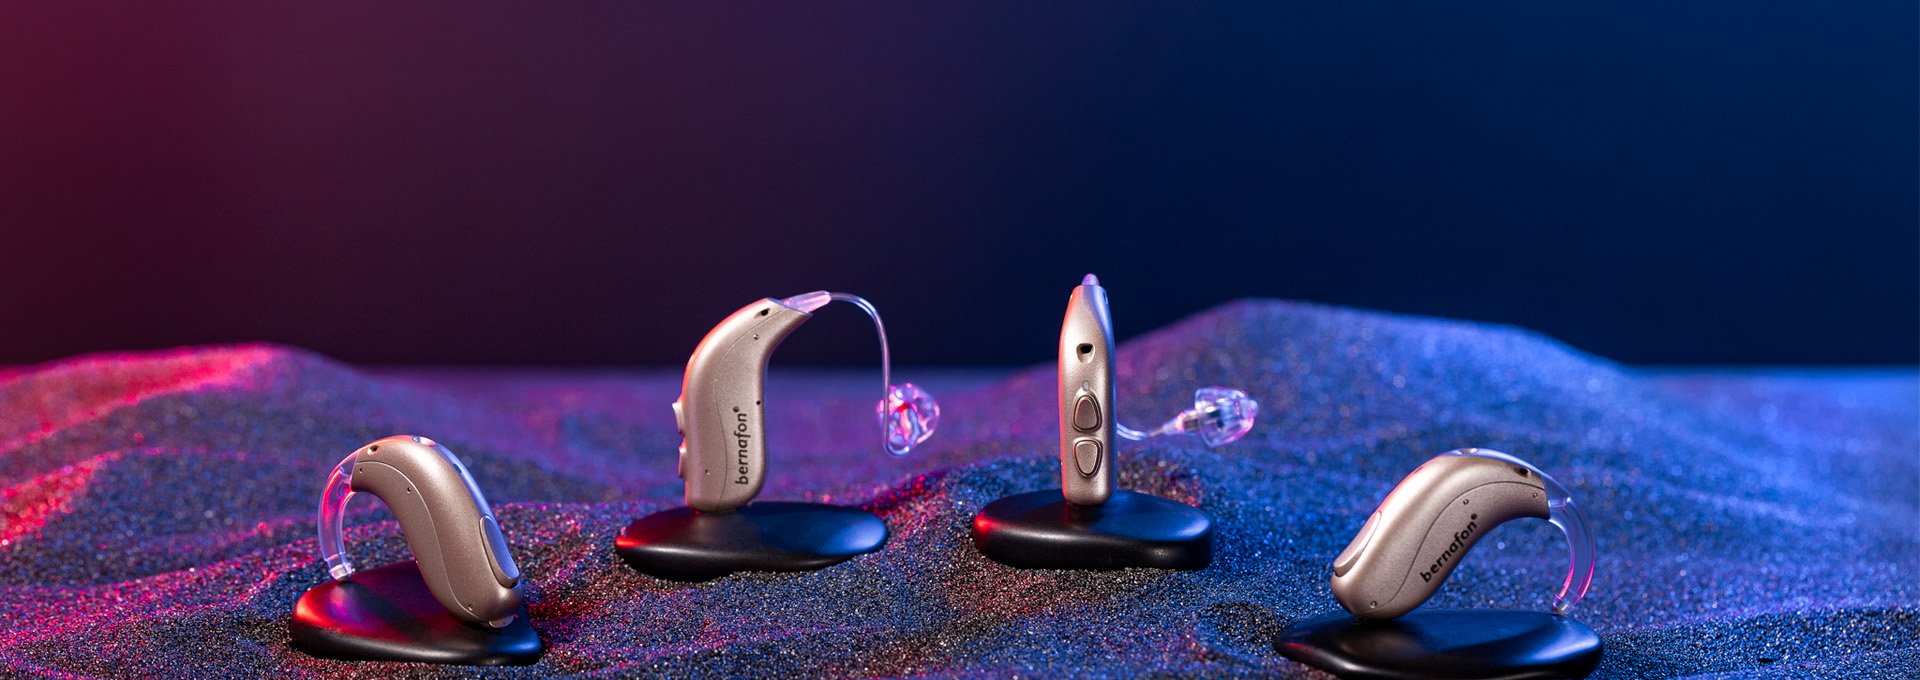 Bernafon Alpha XT miniBTE T, miniRITE T, miniRITE T R, and miniBTE T R hearing aids in black sand with red and blue lights